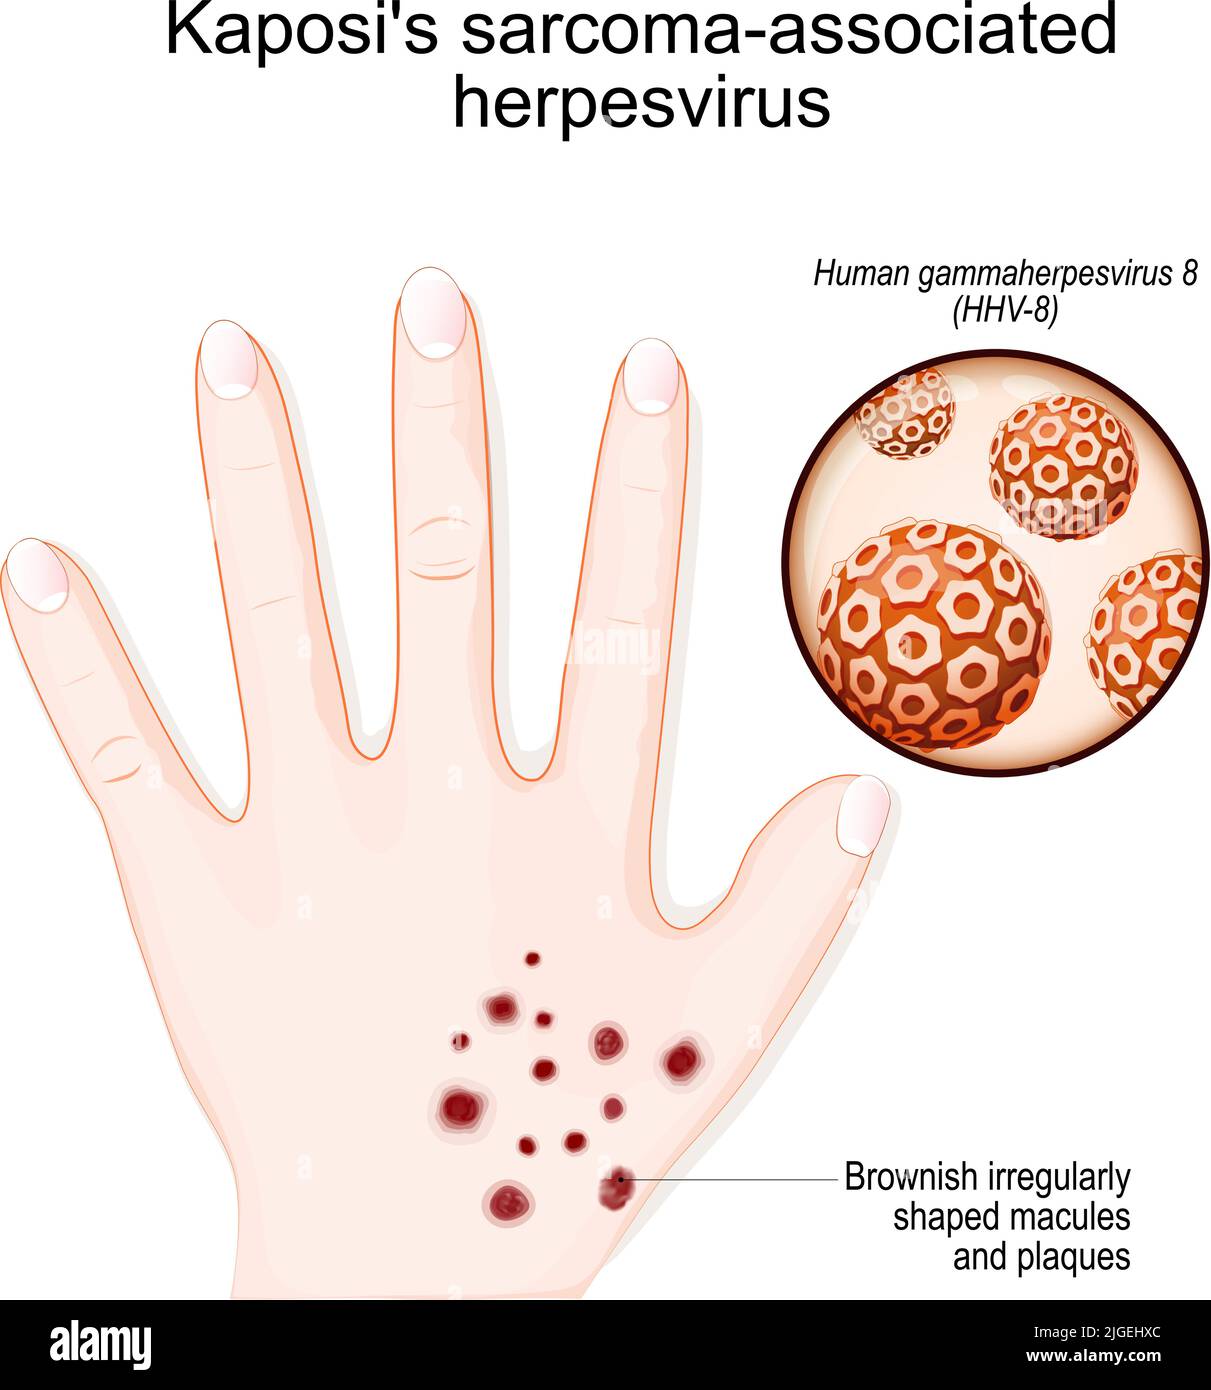 Kaposi's sarcoma-associated herpesvirus. Human's hand with Brownish irregularly shaped macules and plaques. Close-up of Human gammaherpesvirus (HHV-8) Stock Vector